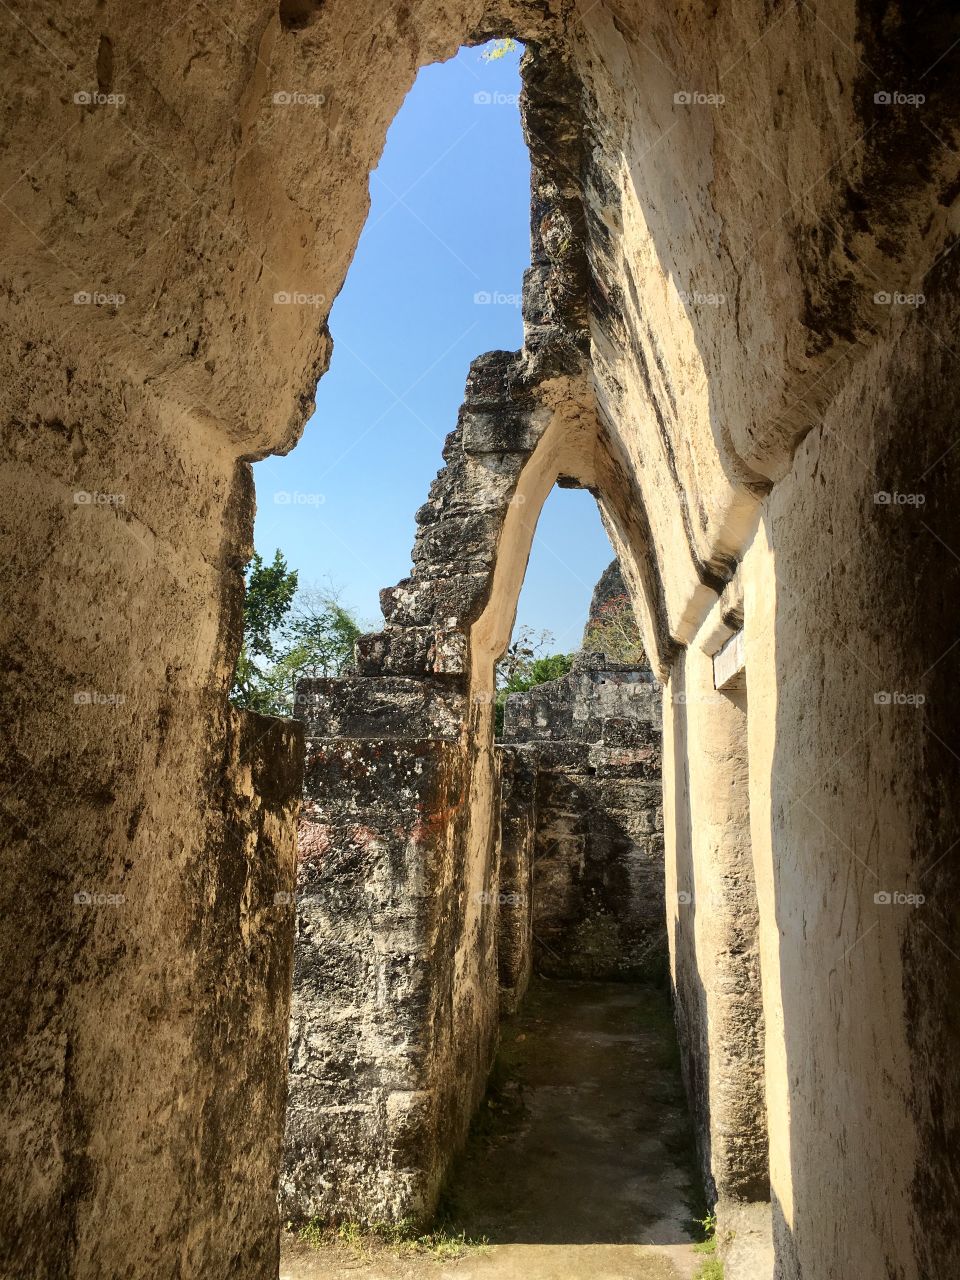 Arches in ancient Myan ruins. Tikal, Guatemala 